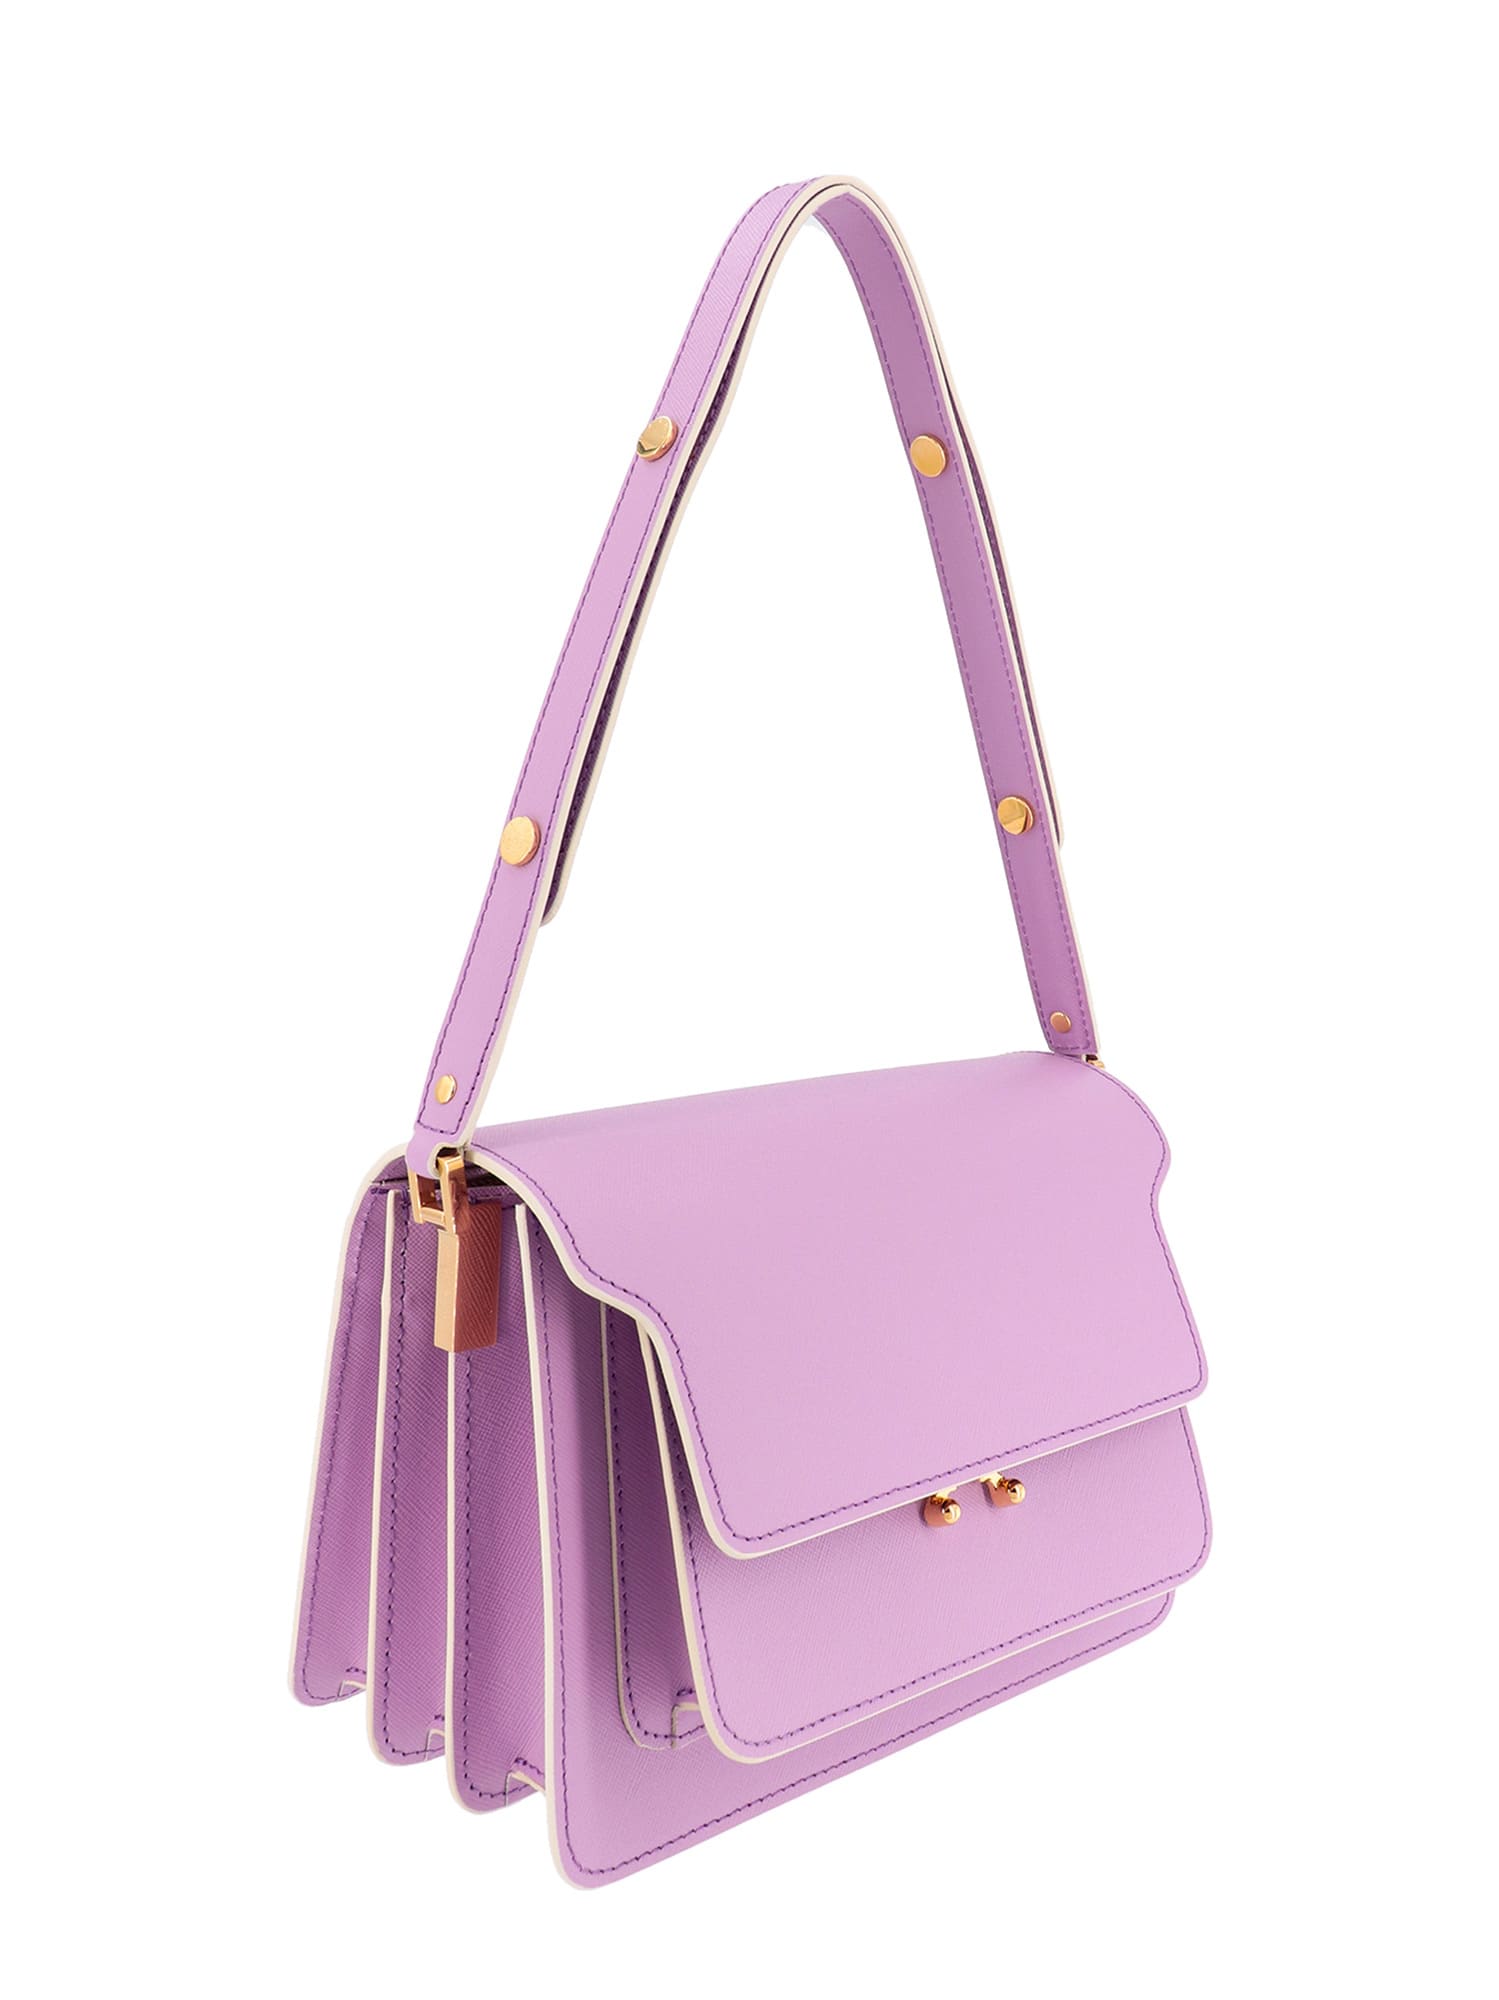 Marni Trunk Mini Leather Shoulder Bag in Purple